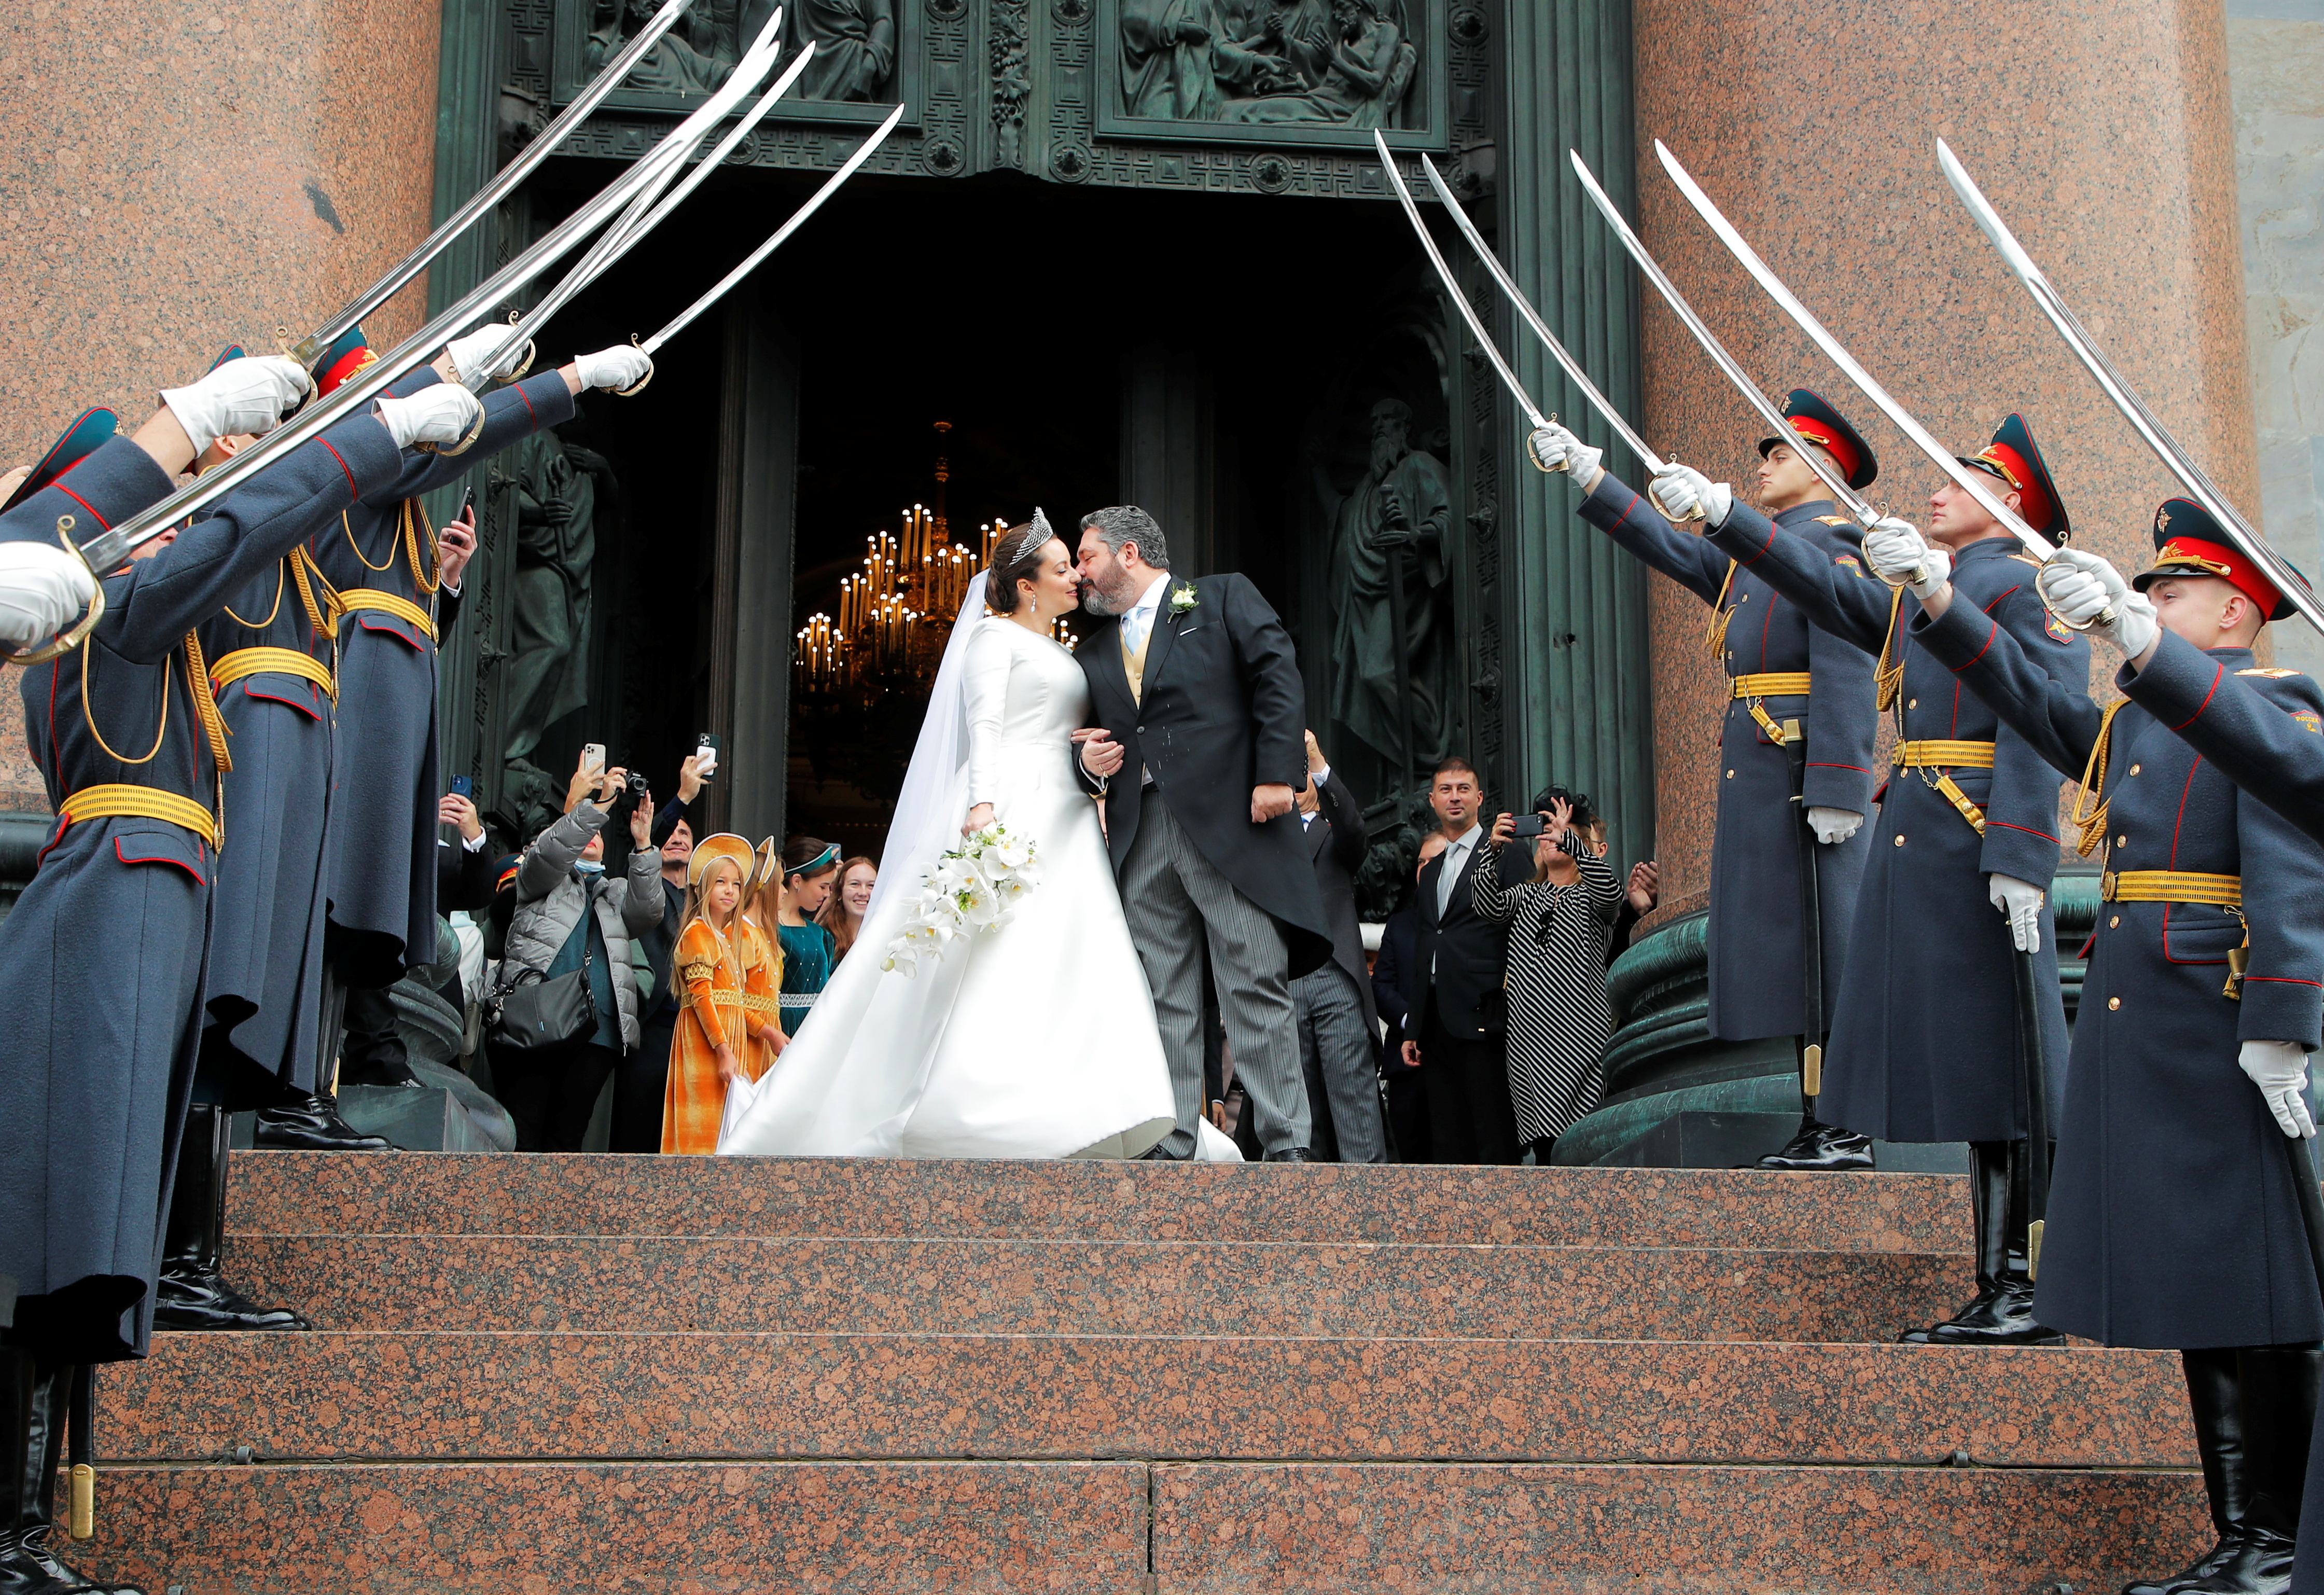 The wedding ceremony of Grand Duke George Mikhailovich Romanov and Victoria Romanovna Bettarini in Saint Petersburg